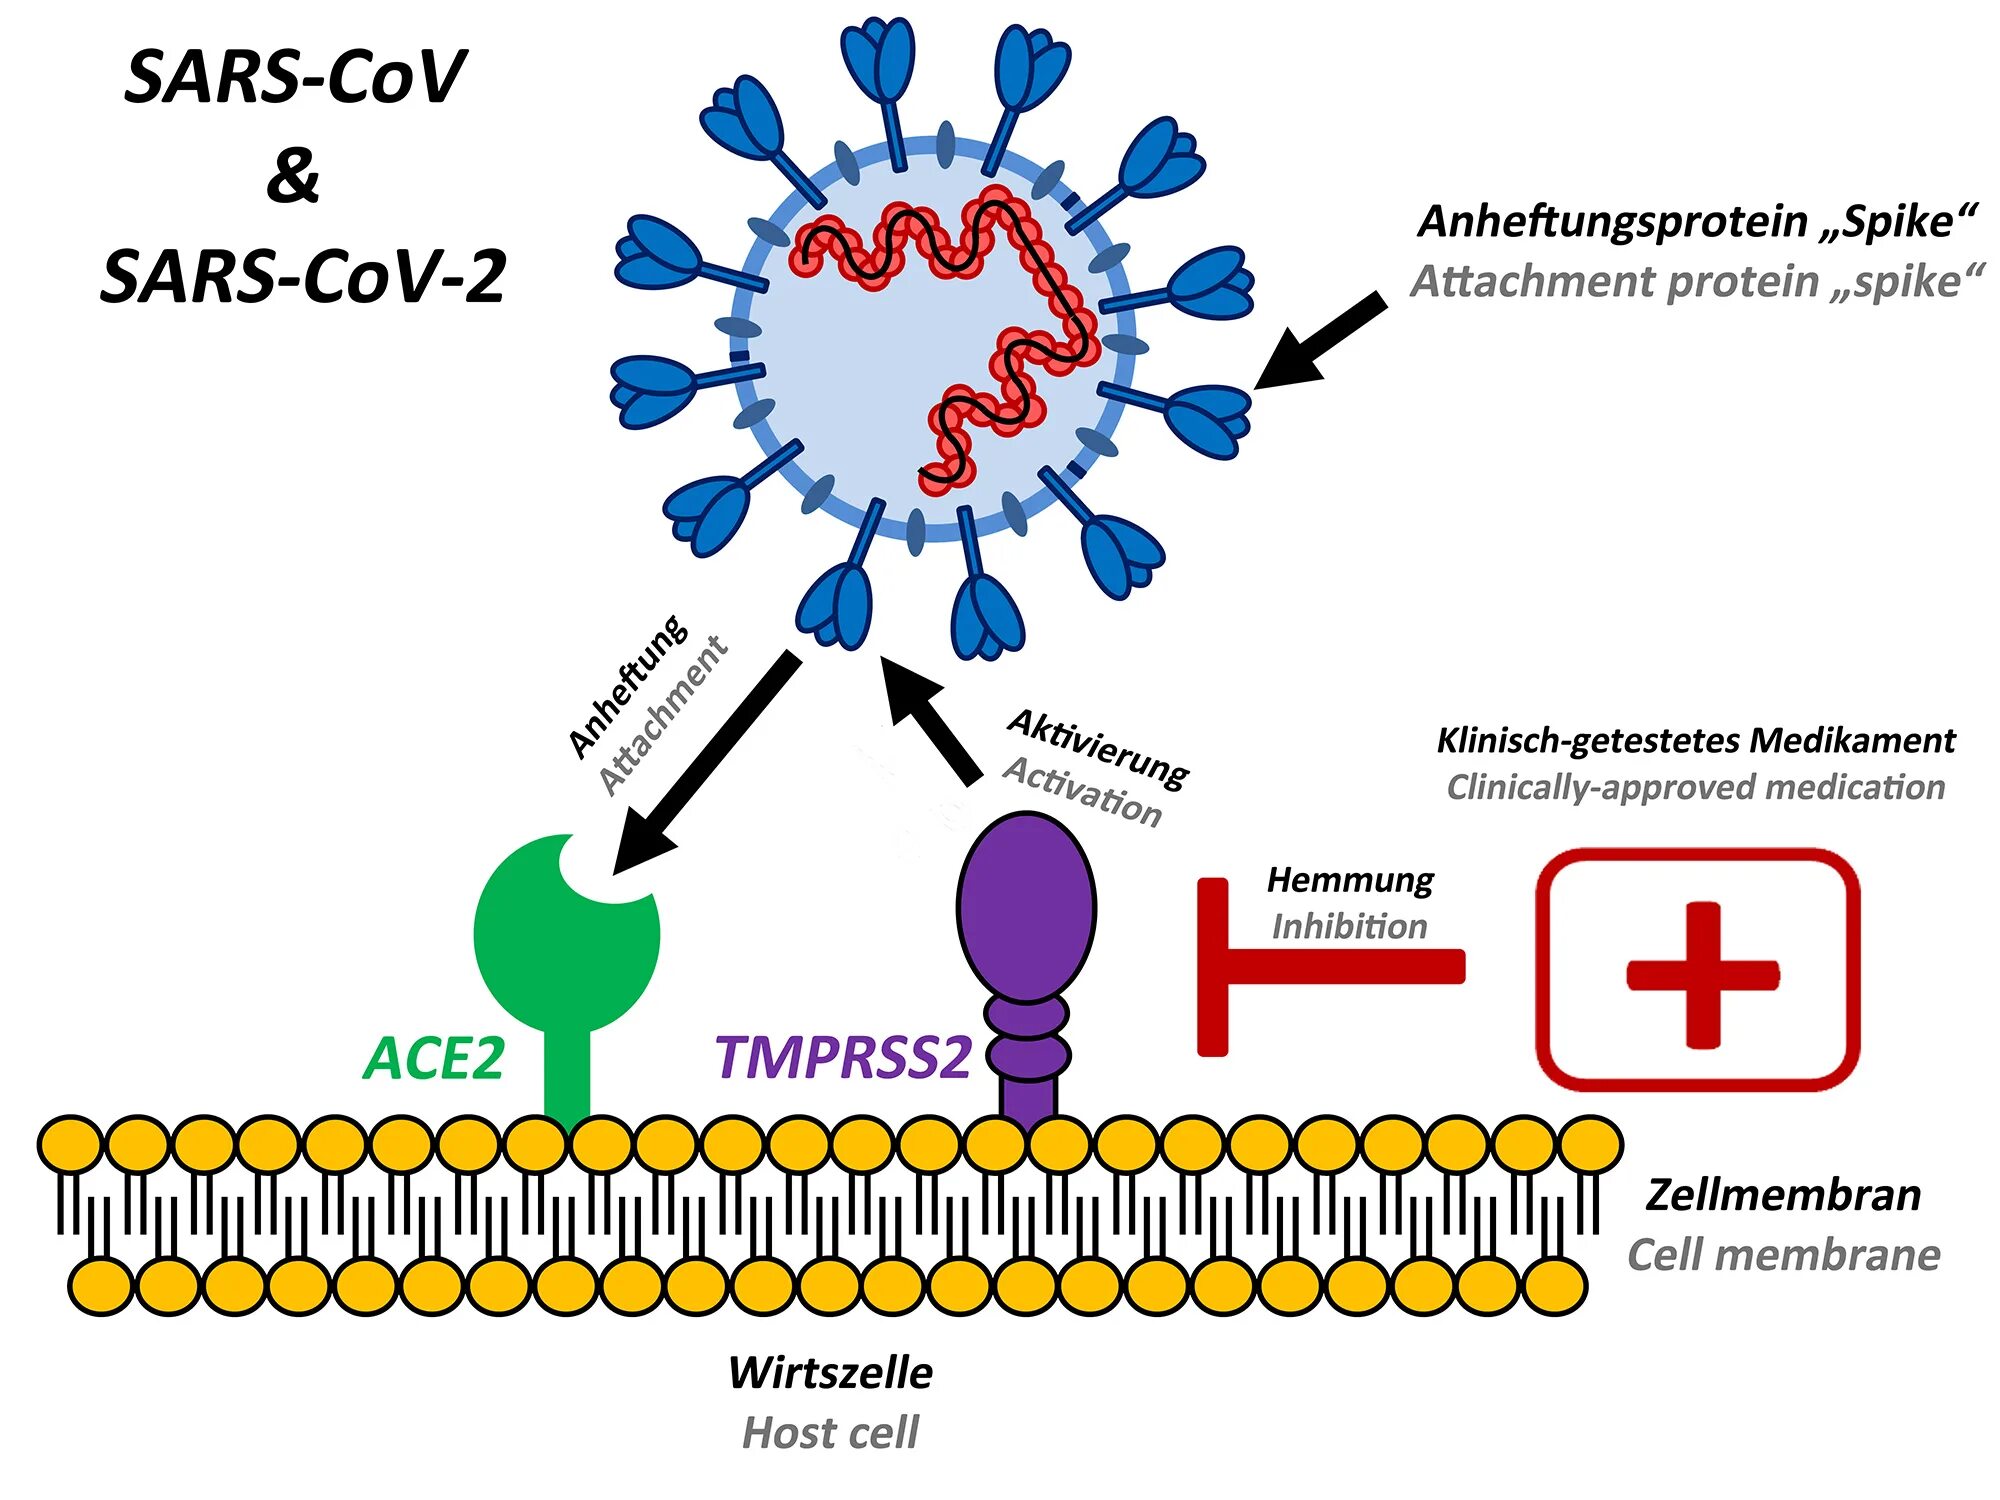 Ace 2 Рецептор коронавирус. Коронавирус строение Covid 19. Рецепторы клеток для SARS-cov-2. Строение вируса SARS-cov-2. Коронавирус весной 2020 года